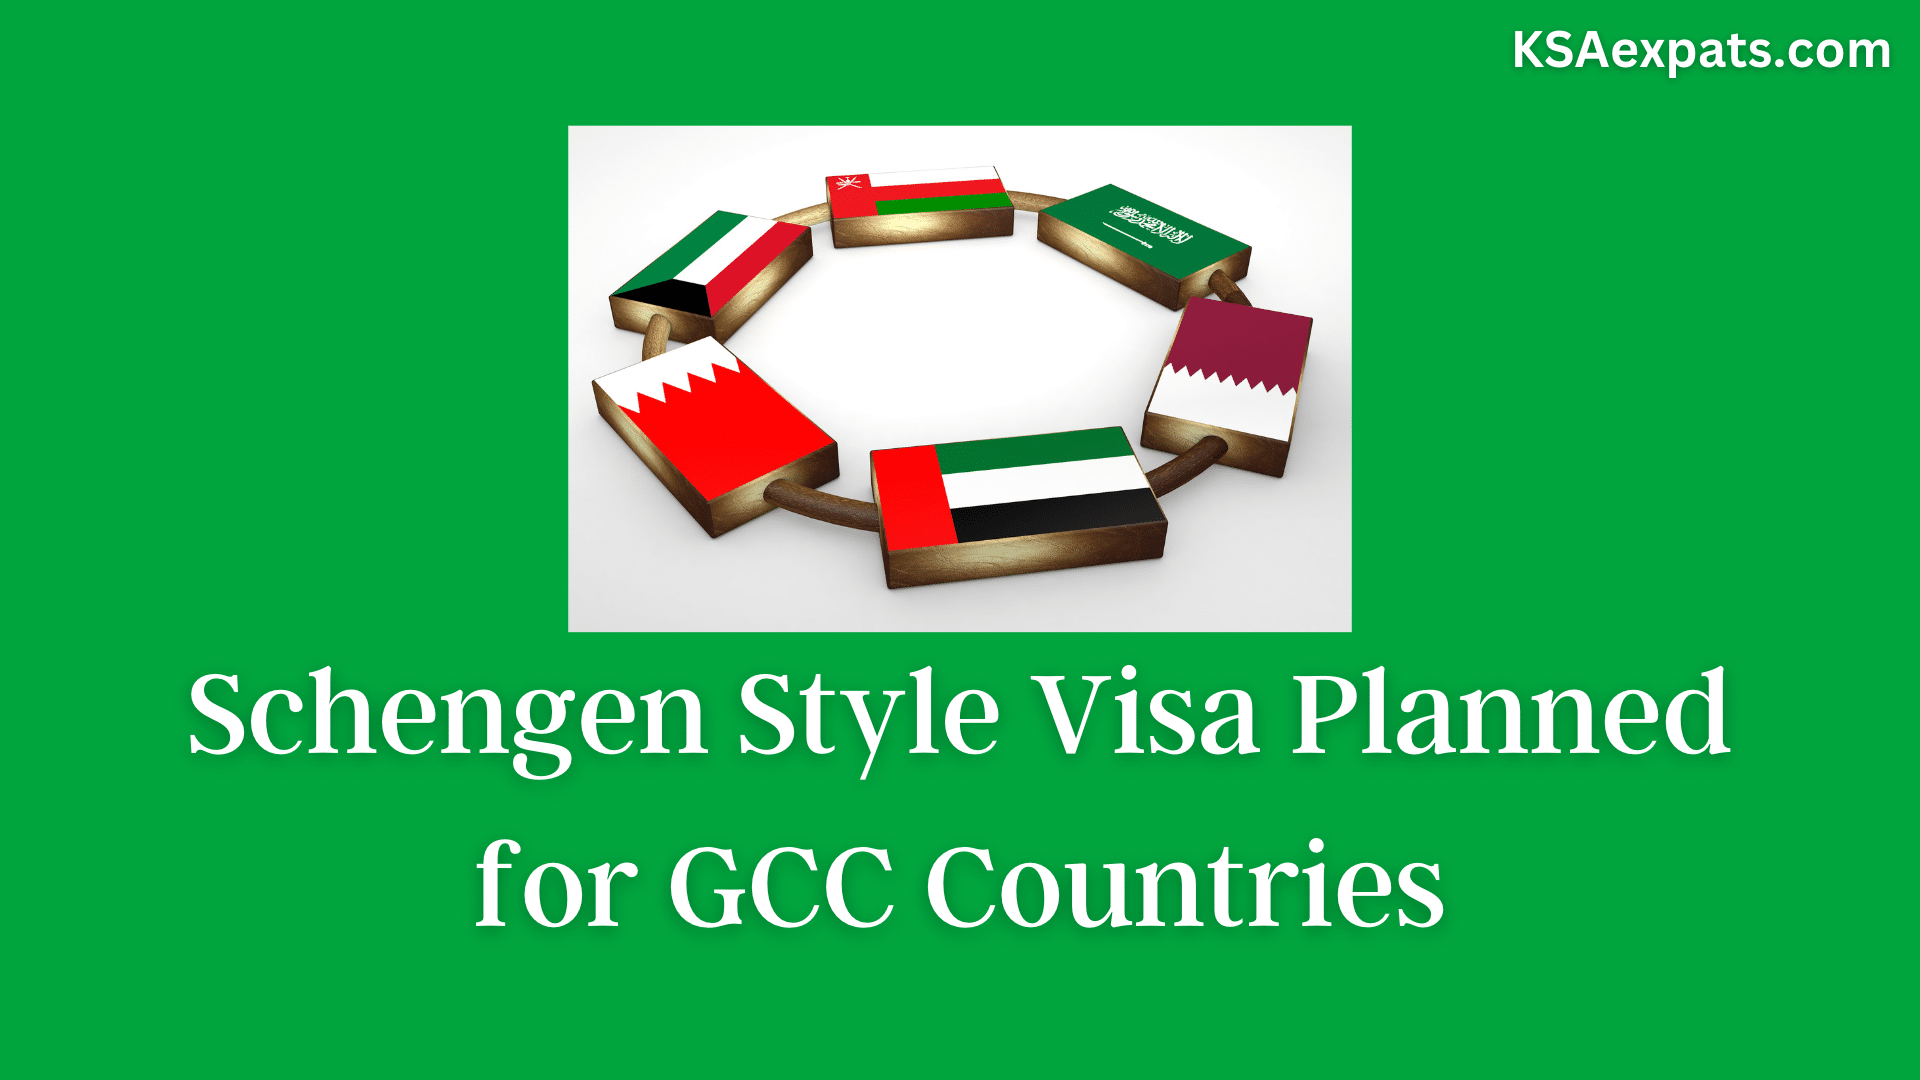 Schengen Style Visa Planned for GCC Countries